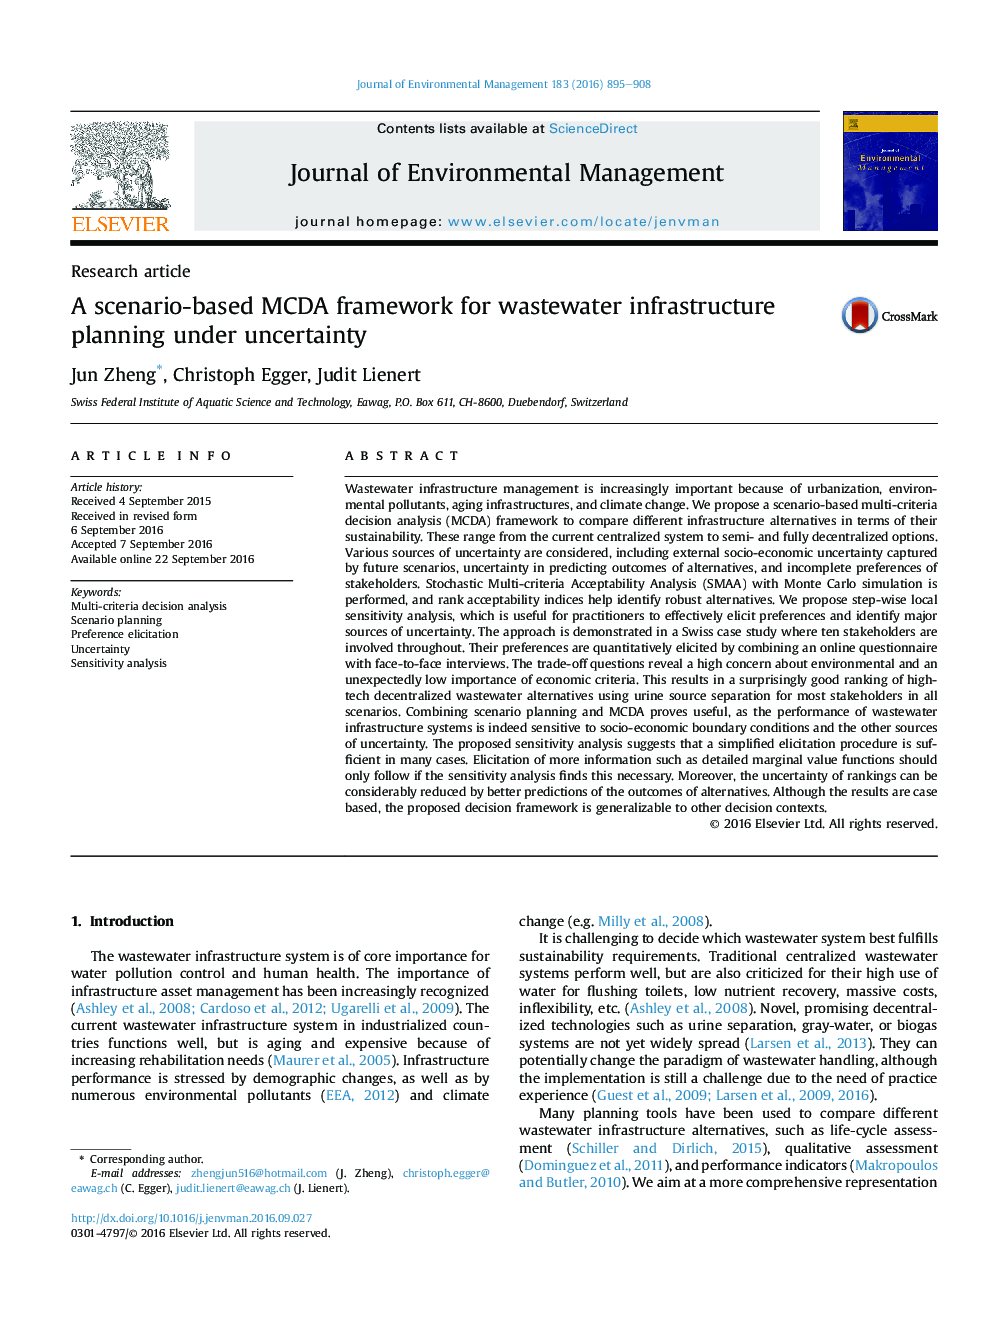 A scenario-based MCDA framework for wastewater infrastructure planning under uncertainty